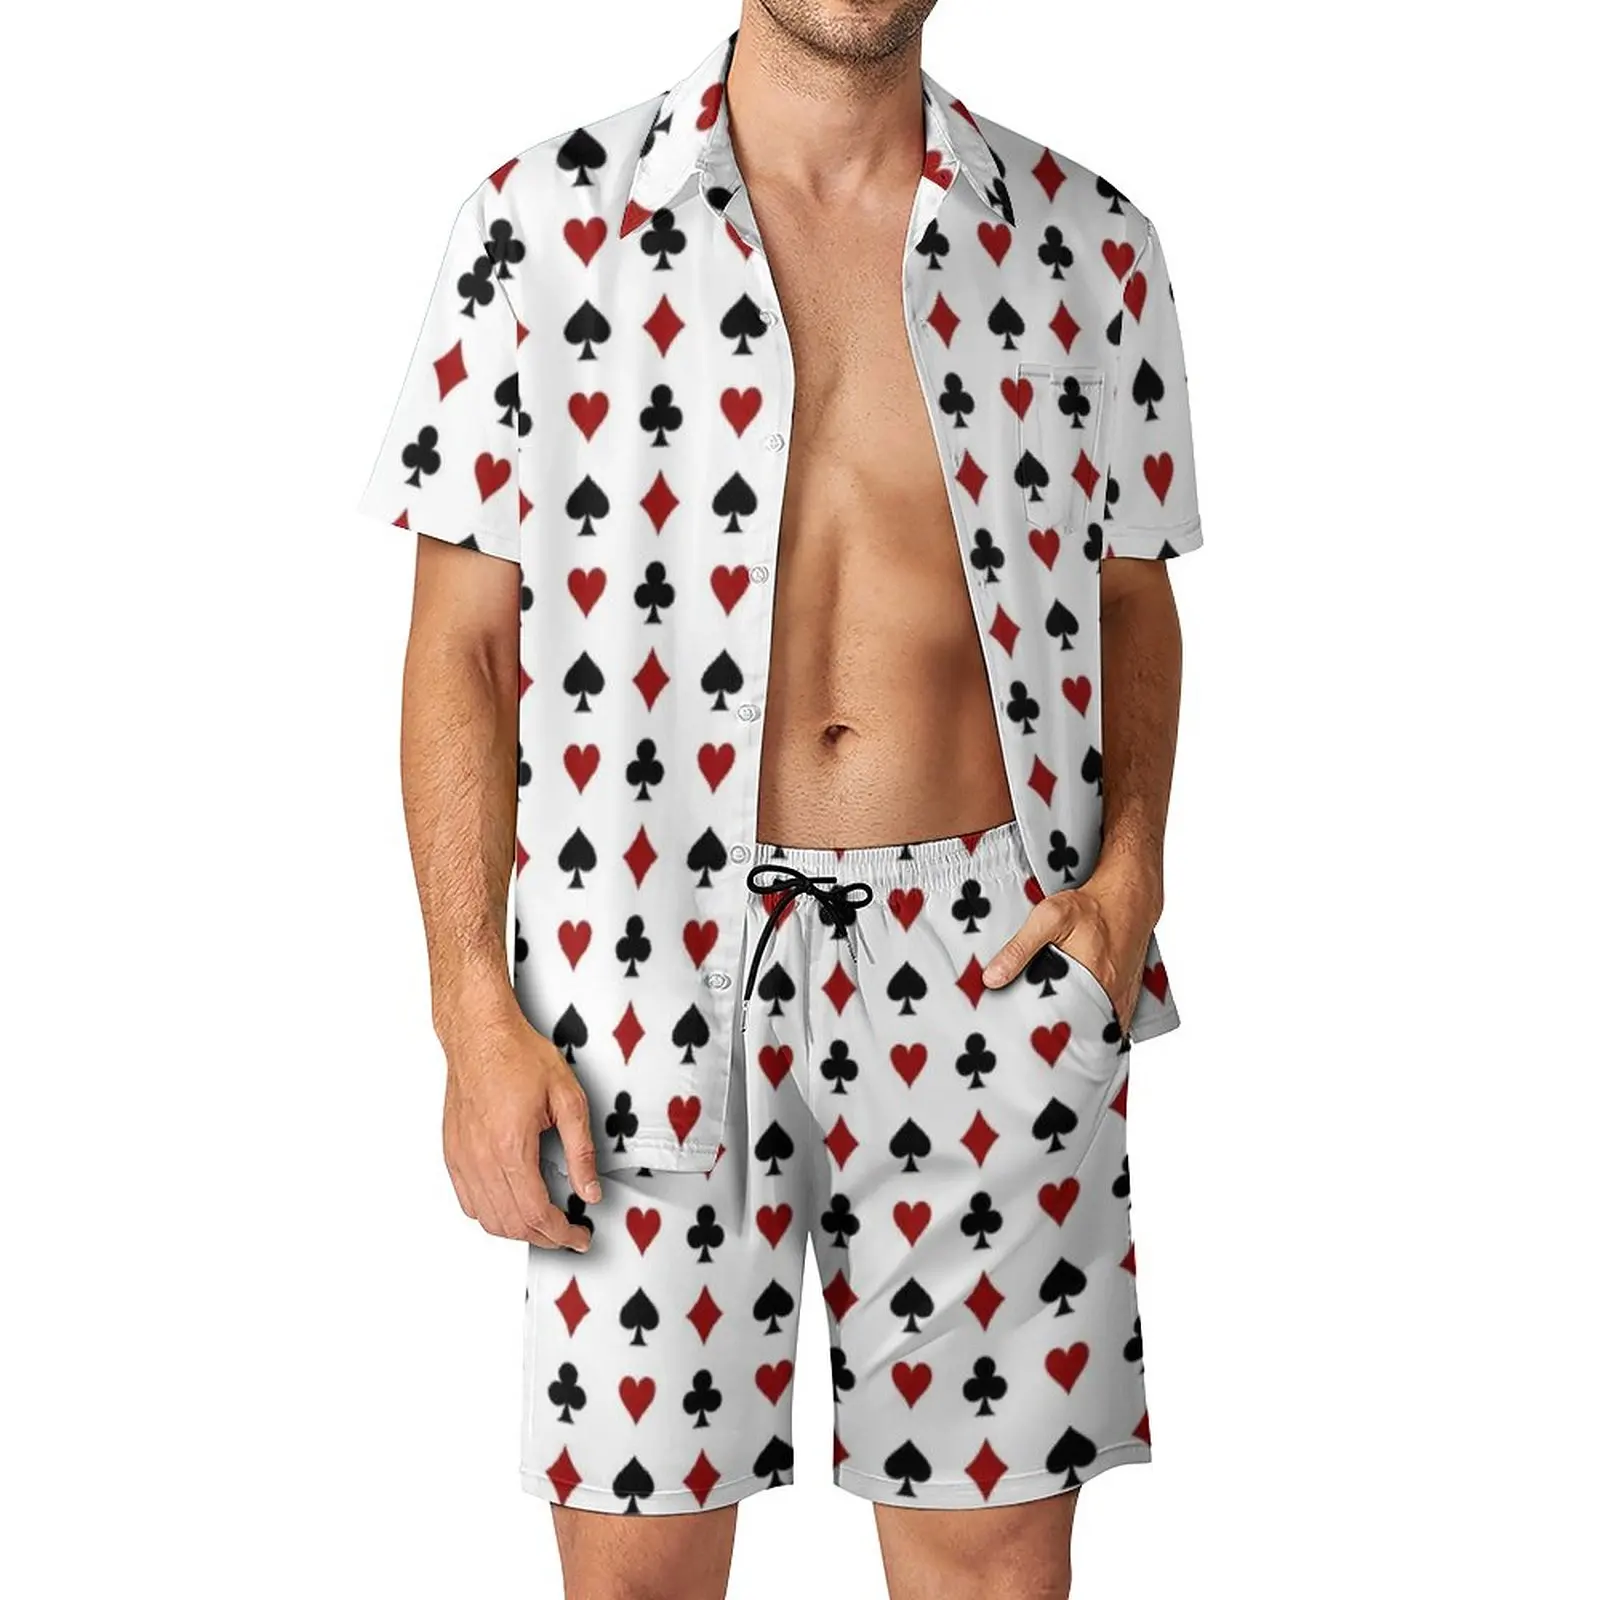 

Playing Poker Men Sets Hearts Diamonds Clubs Spades Card Suits Casual Shorts Beachwear Shirt Set Fun Suit Short-Sleeve Plus Size